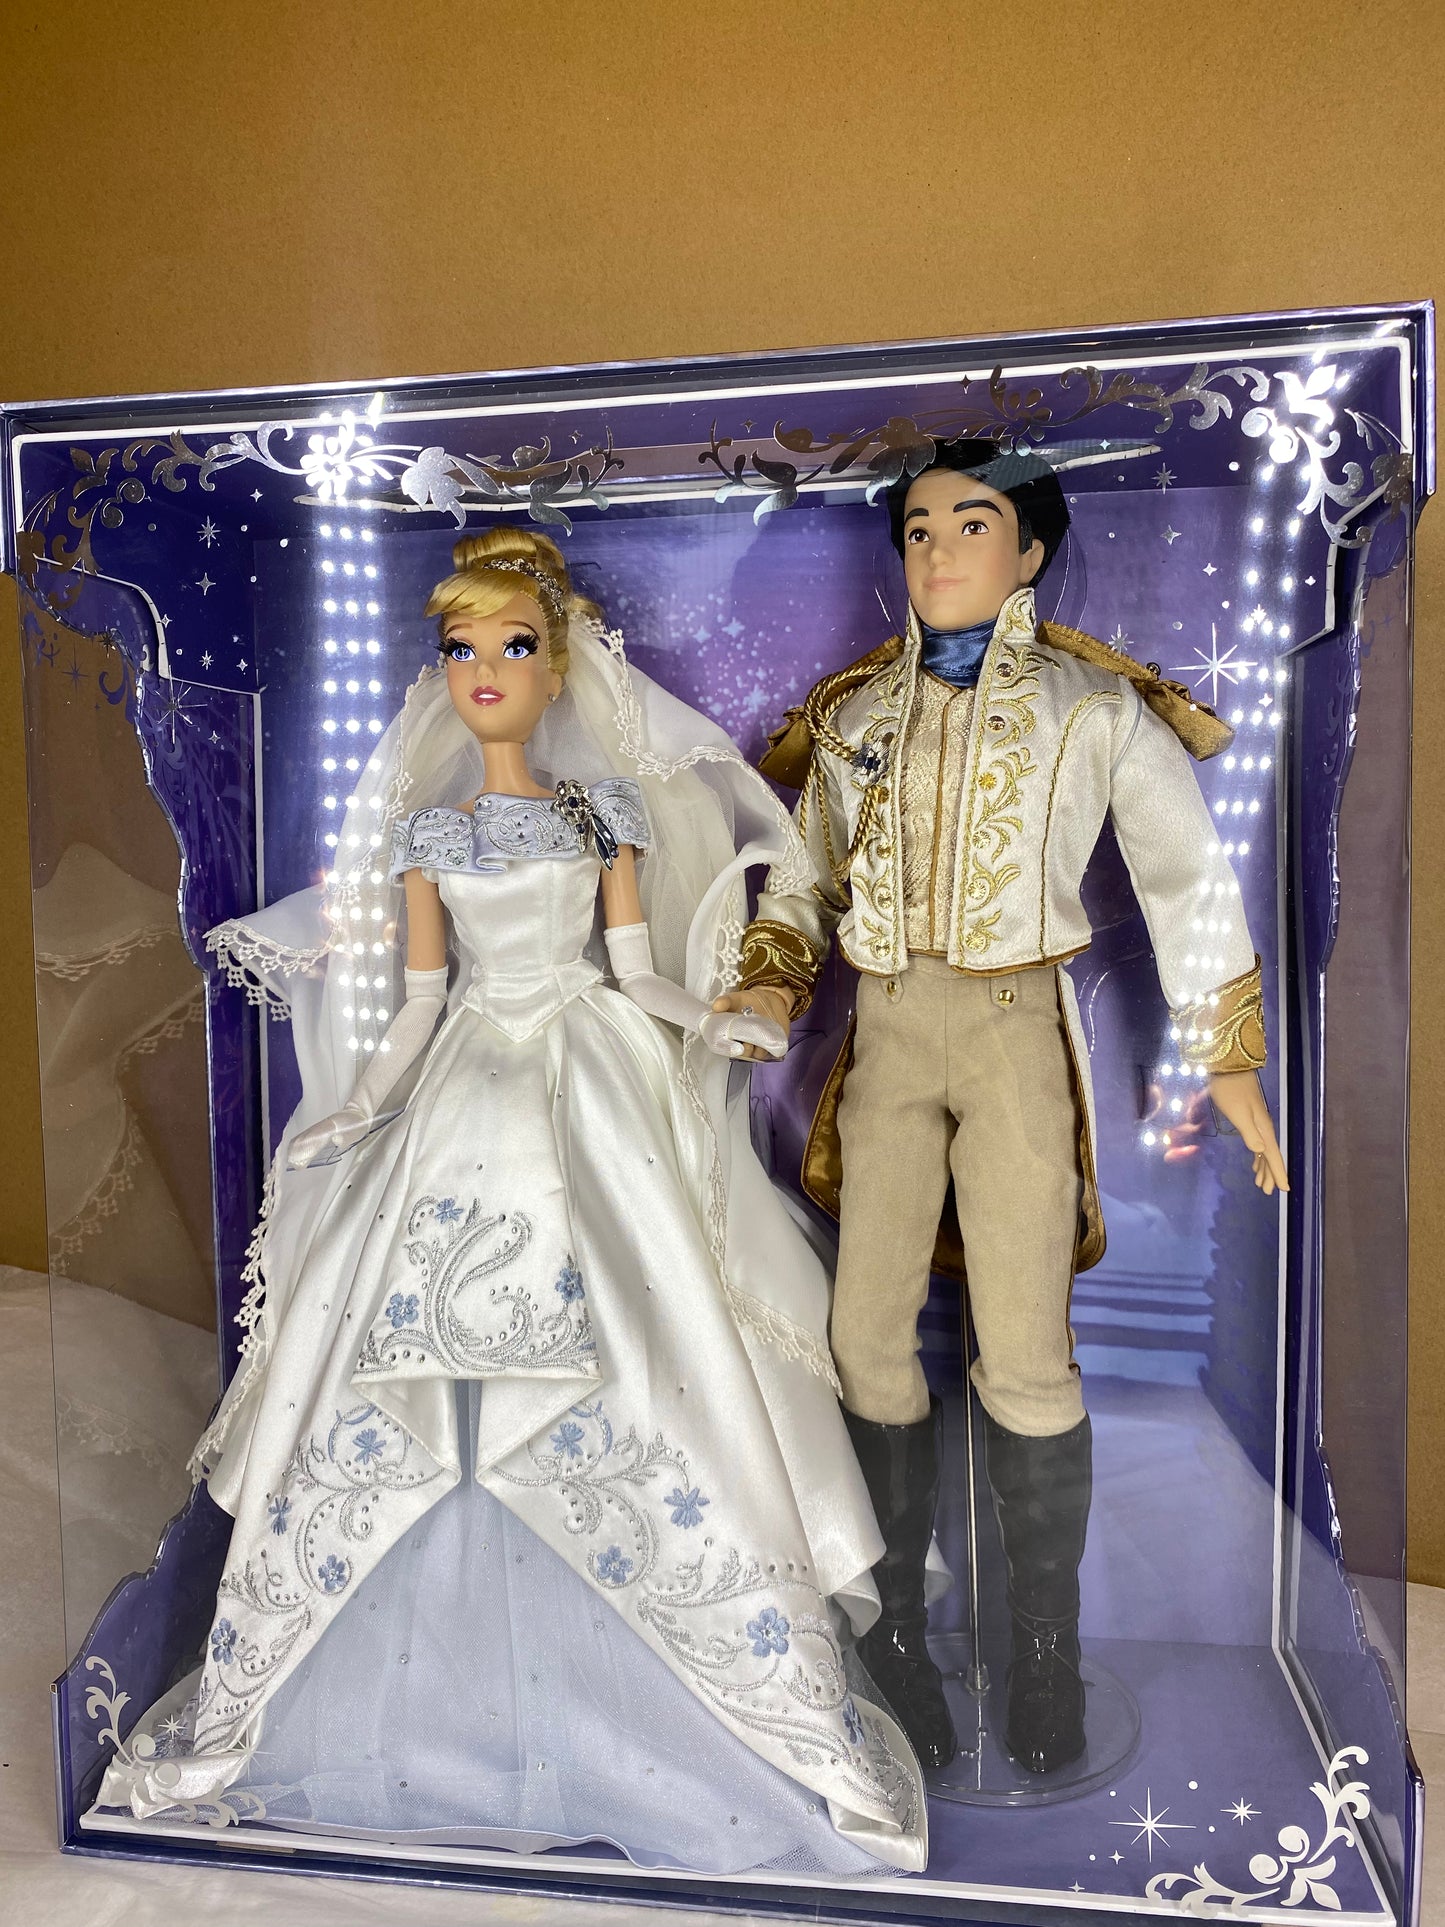 Disney Cinderella And Prince Charming Doll Set Limited Platinum Wedding Dollset